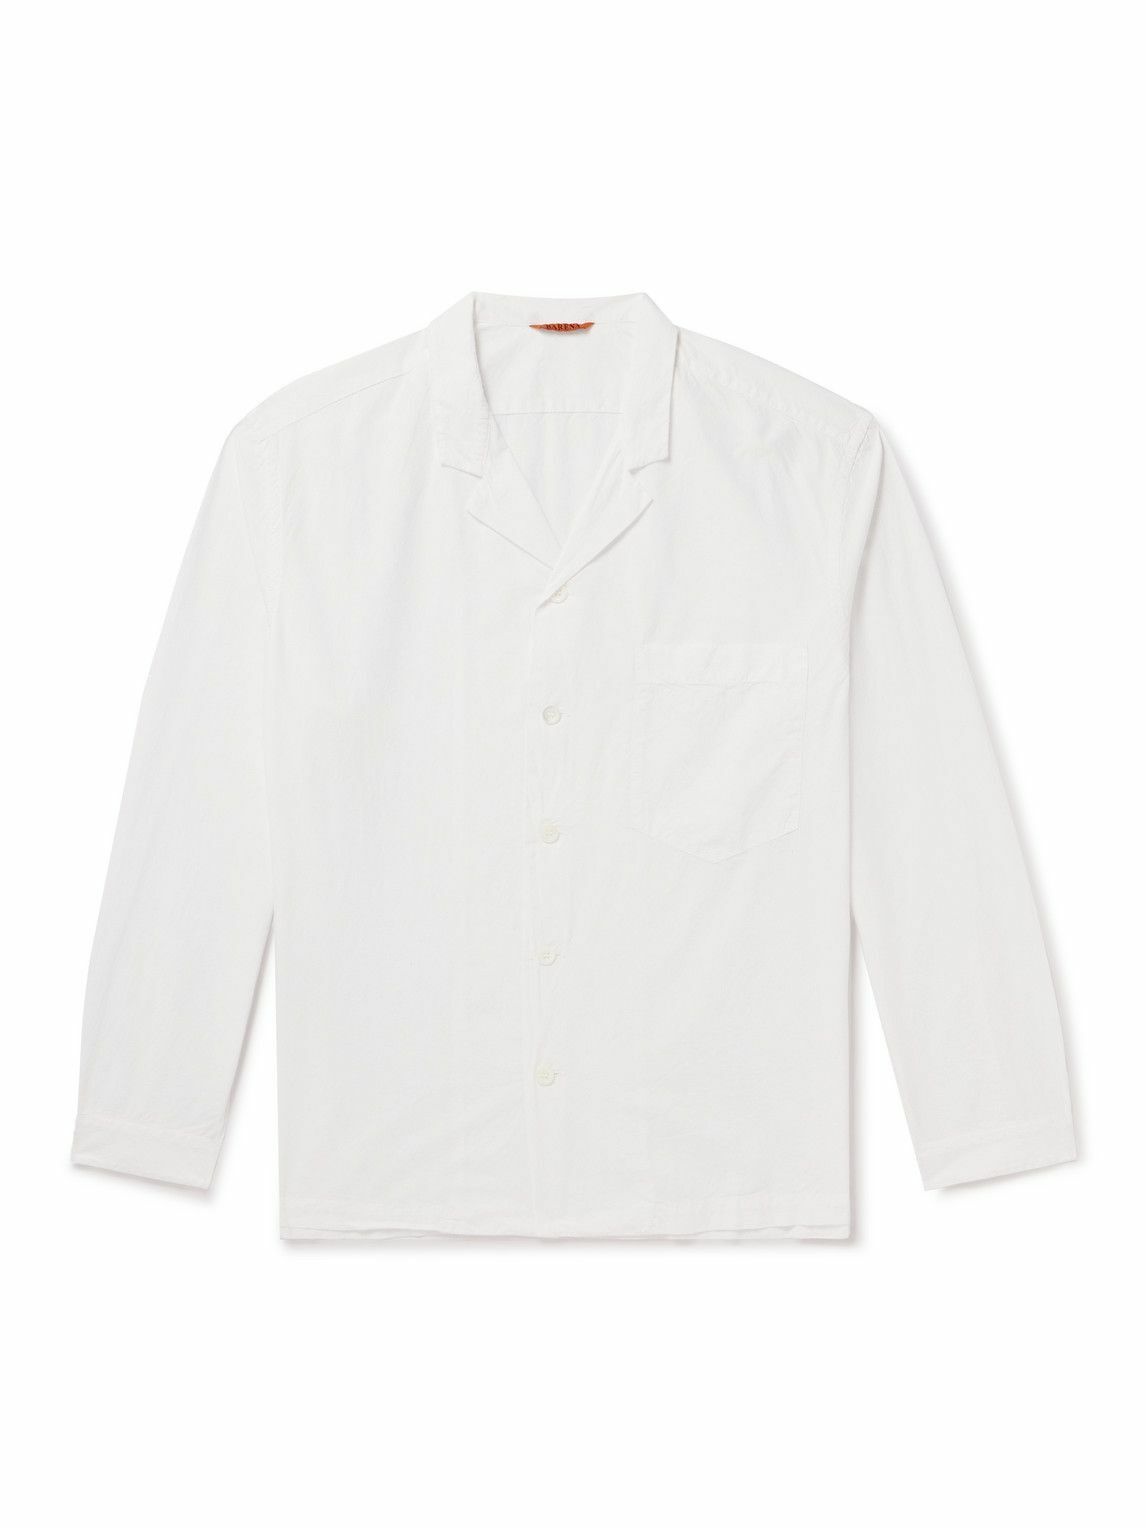 Barena - Camp-Collar Cotton Shirt - White Barena